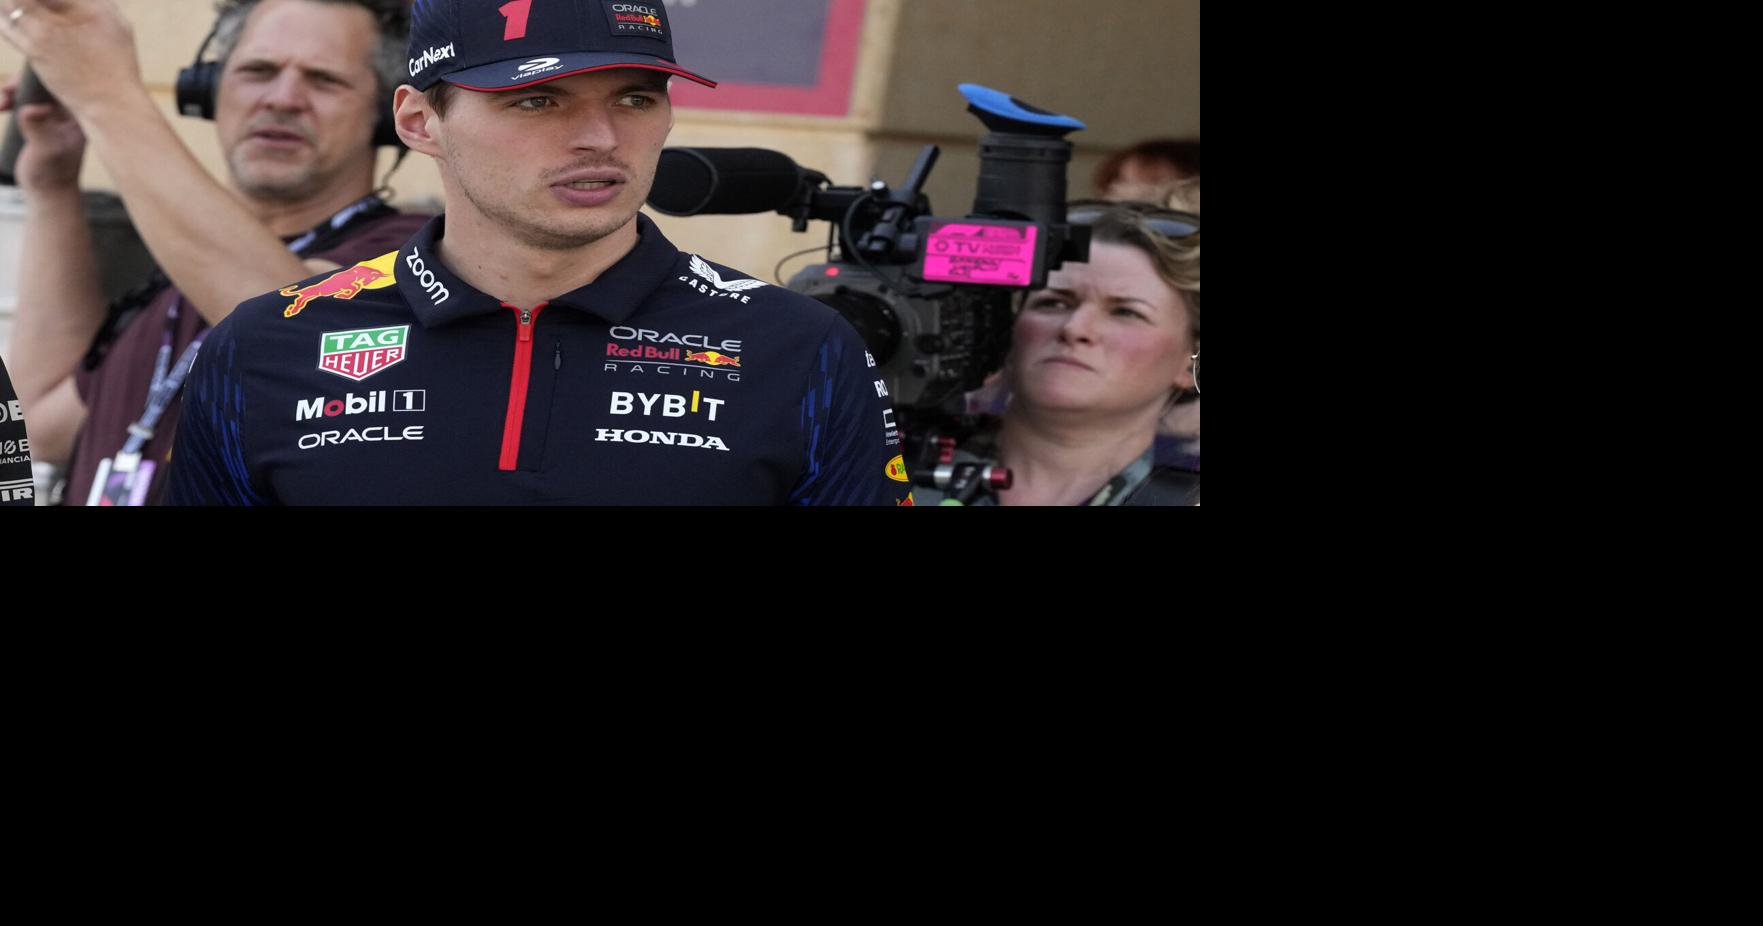 2022 Max Verstappen Red Bull World Champion Caricature T-Shirt